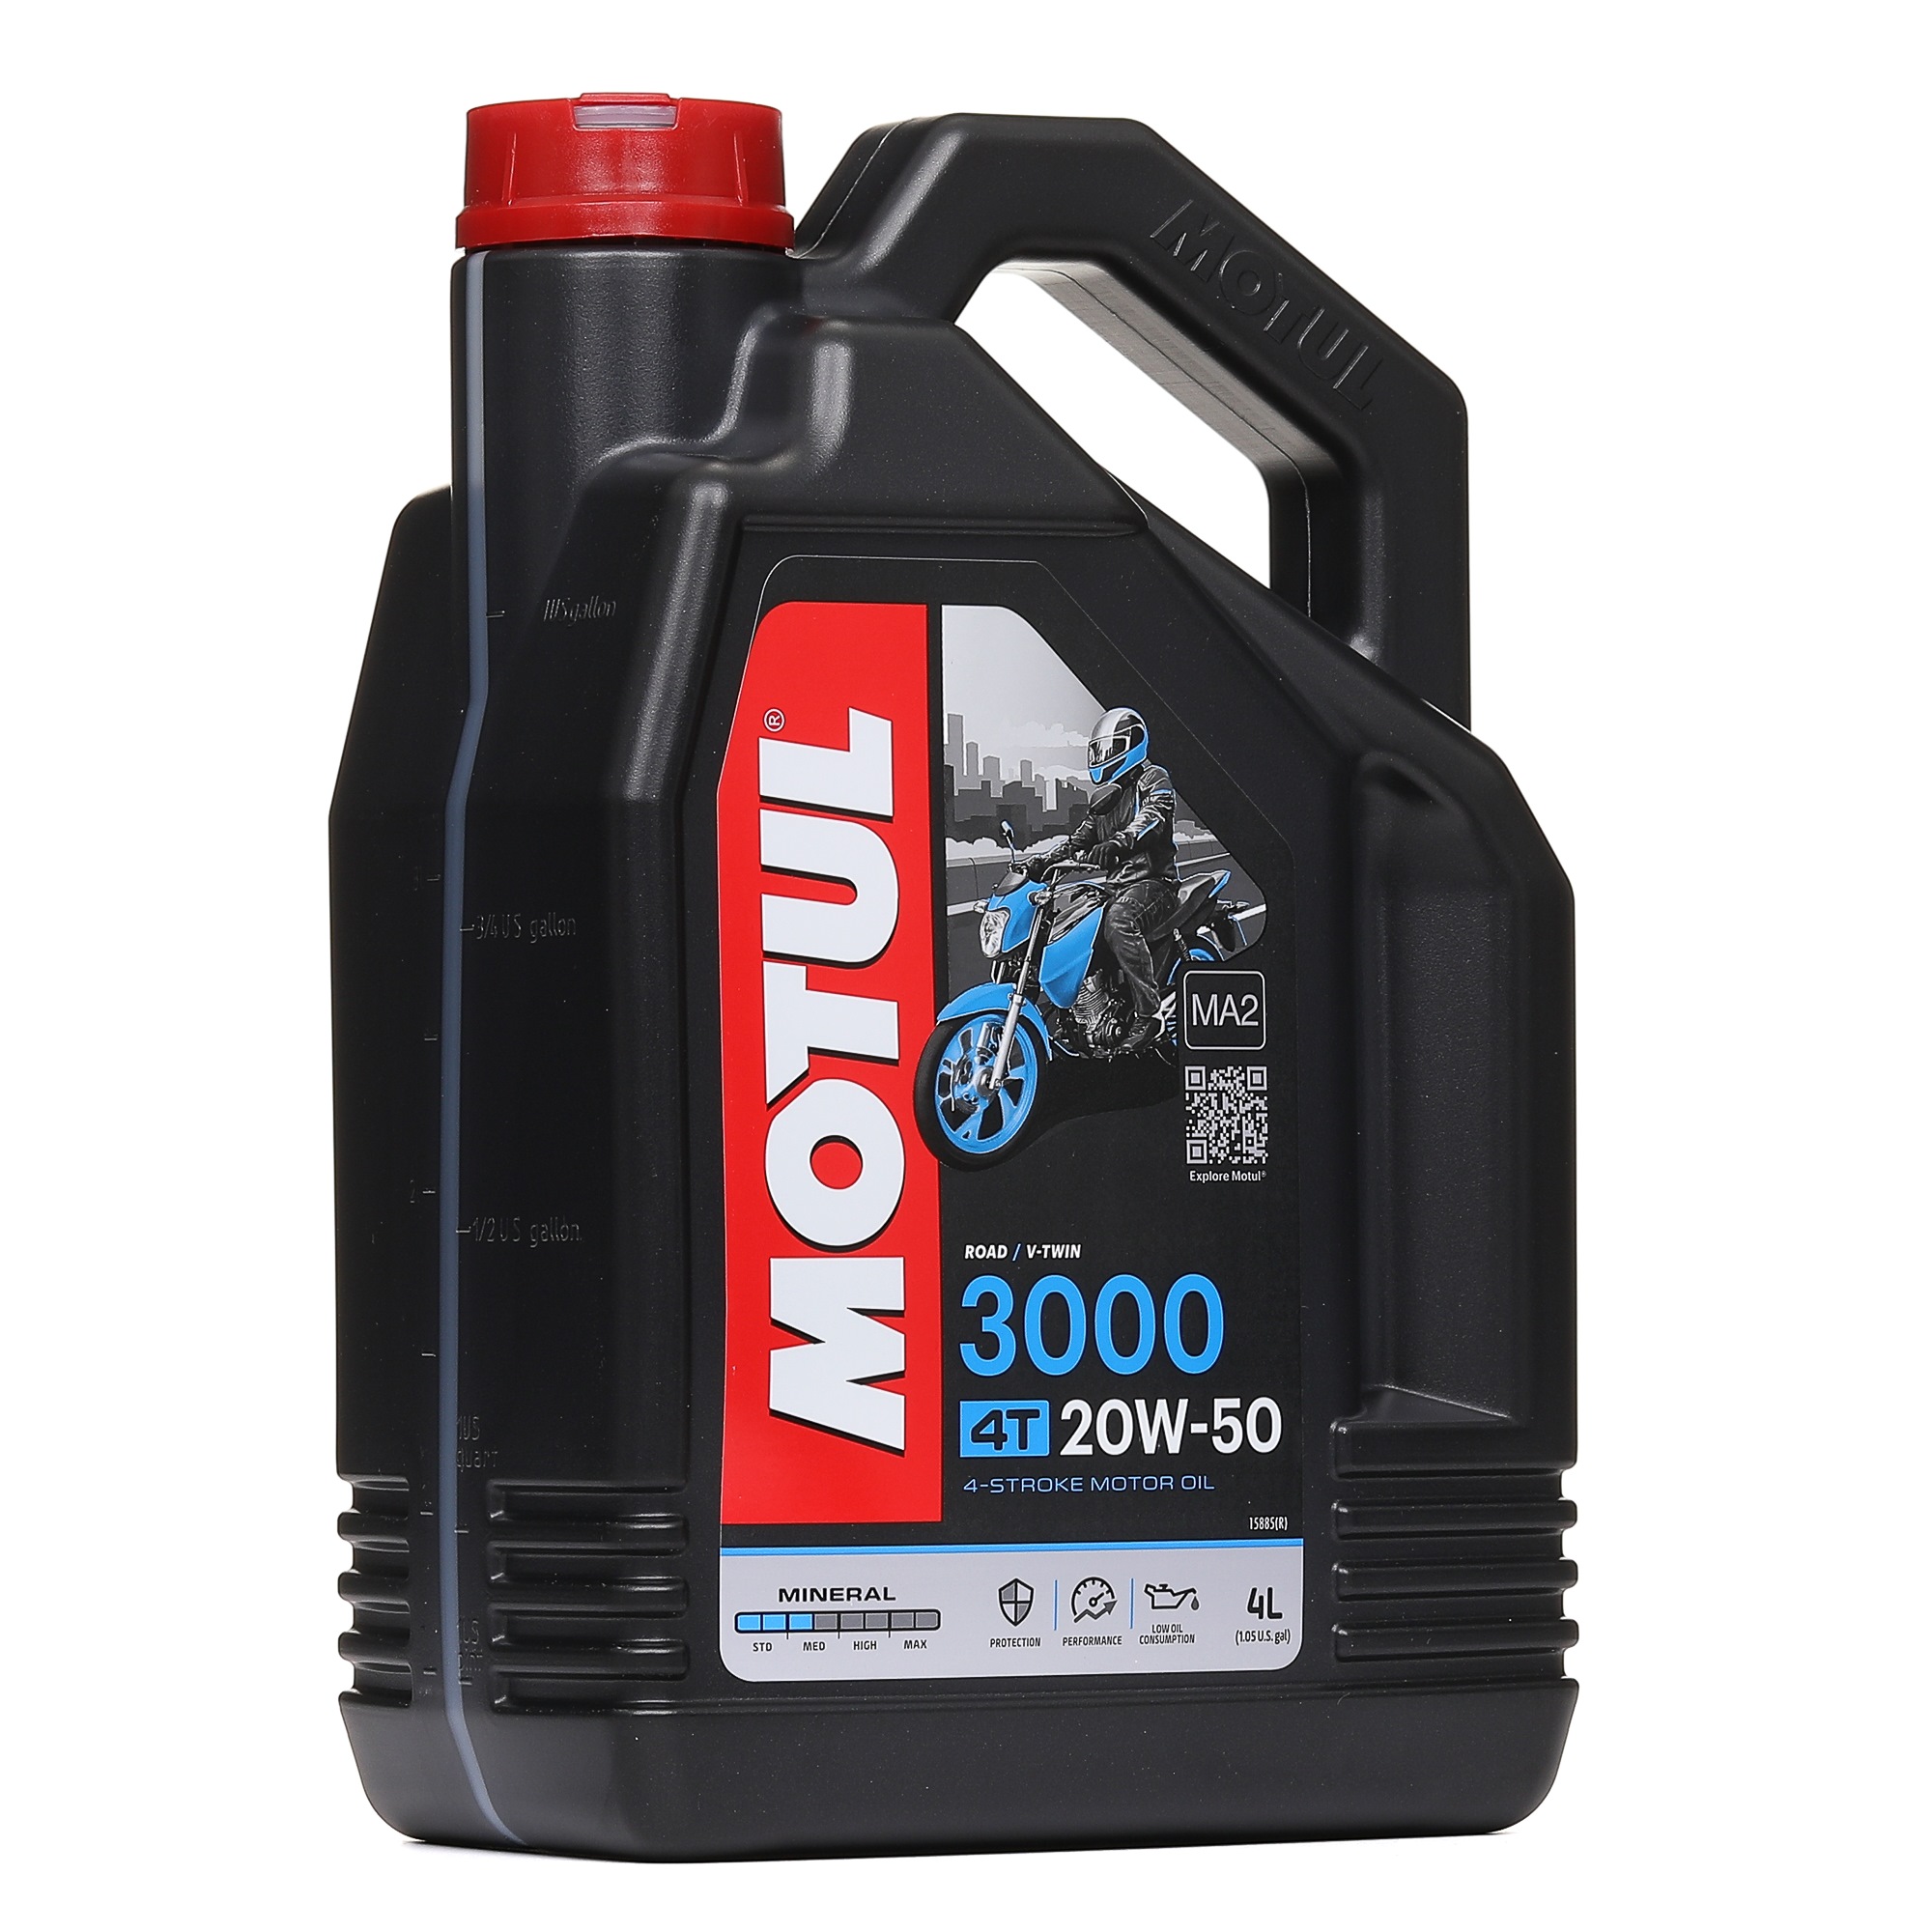 Motorenöl API SG 20W-50 Diesel - MOTUL 104050 4T